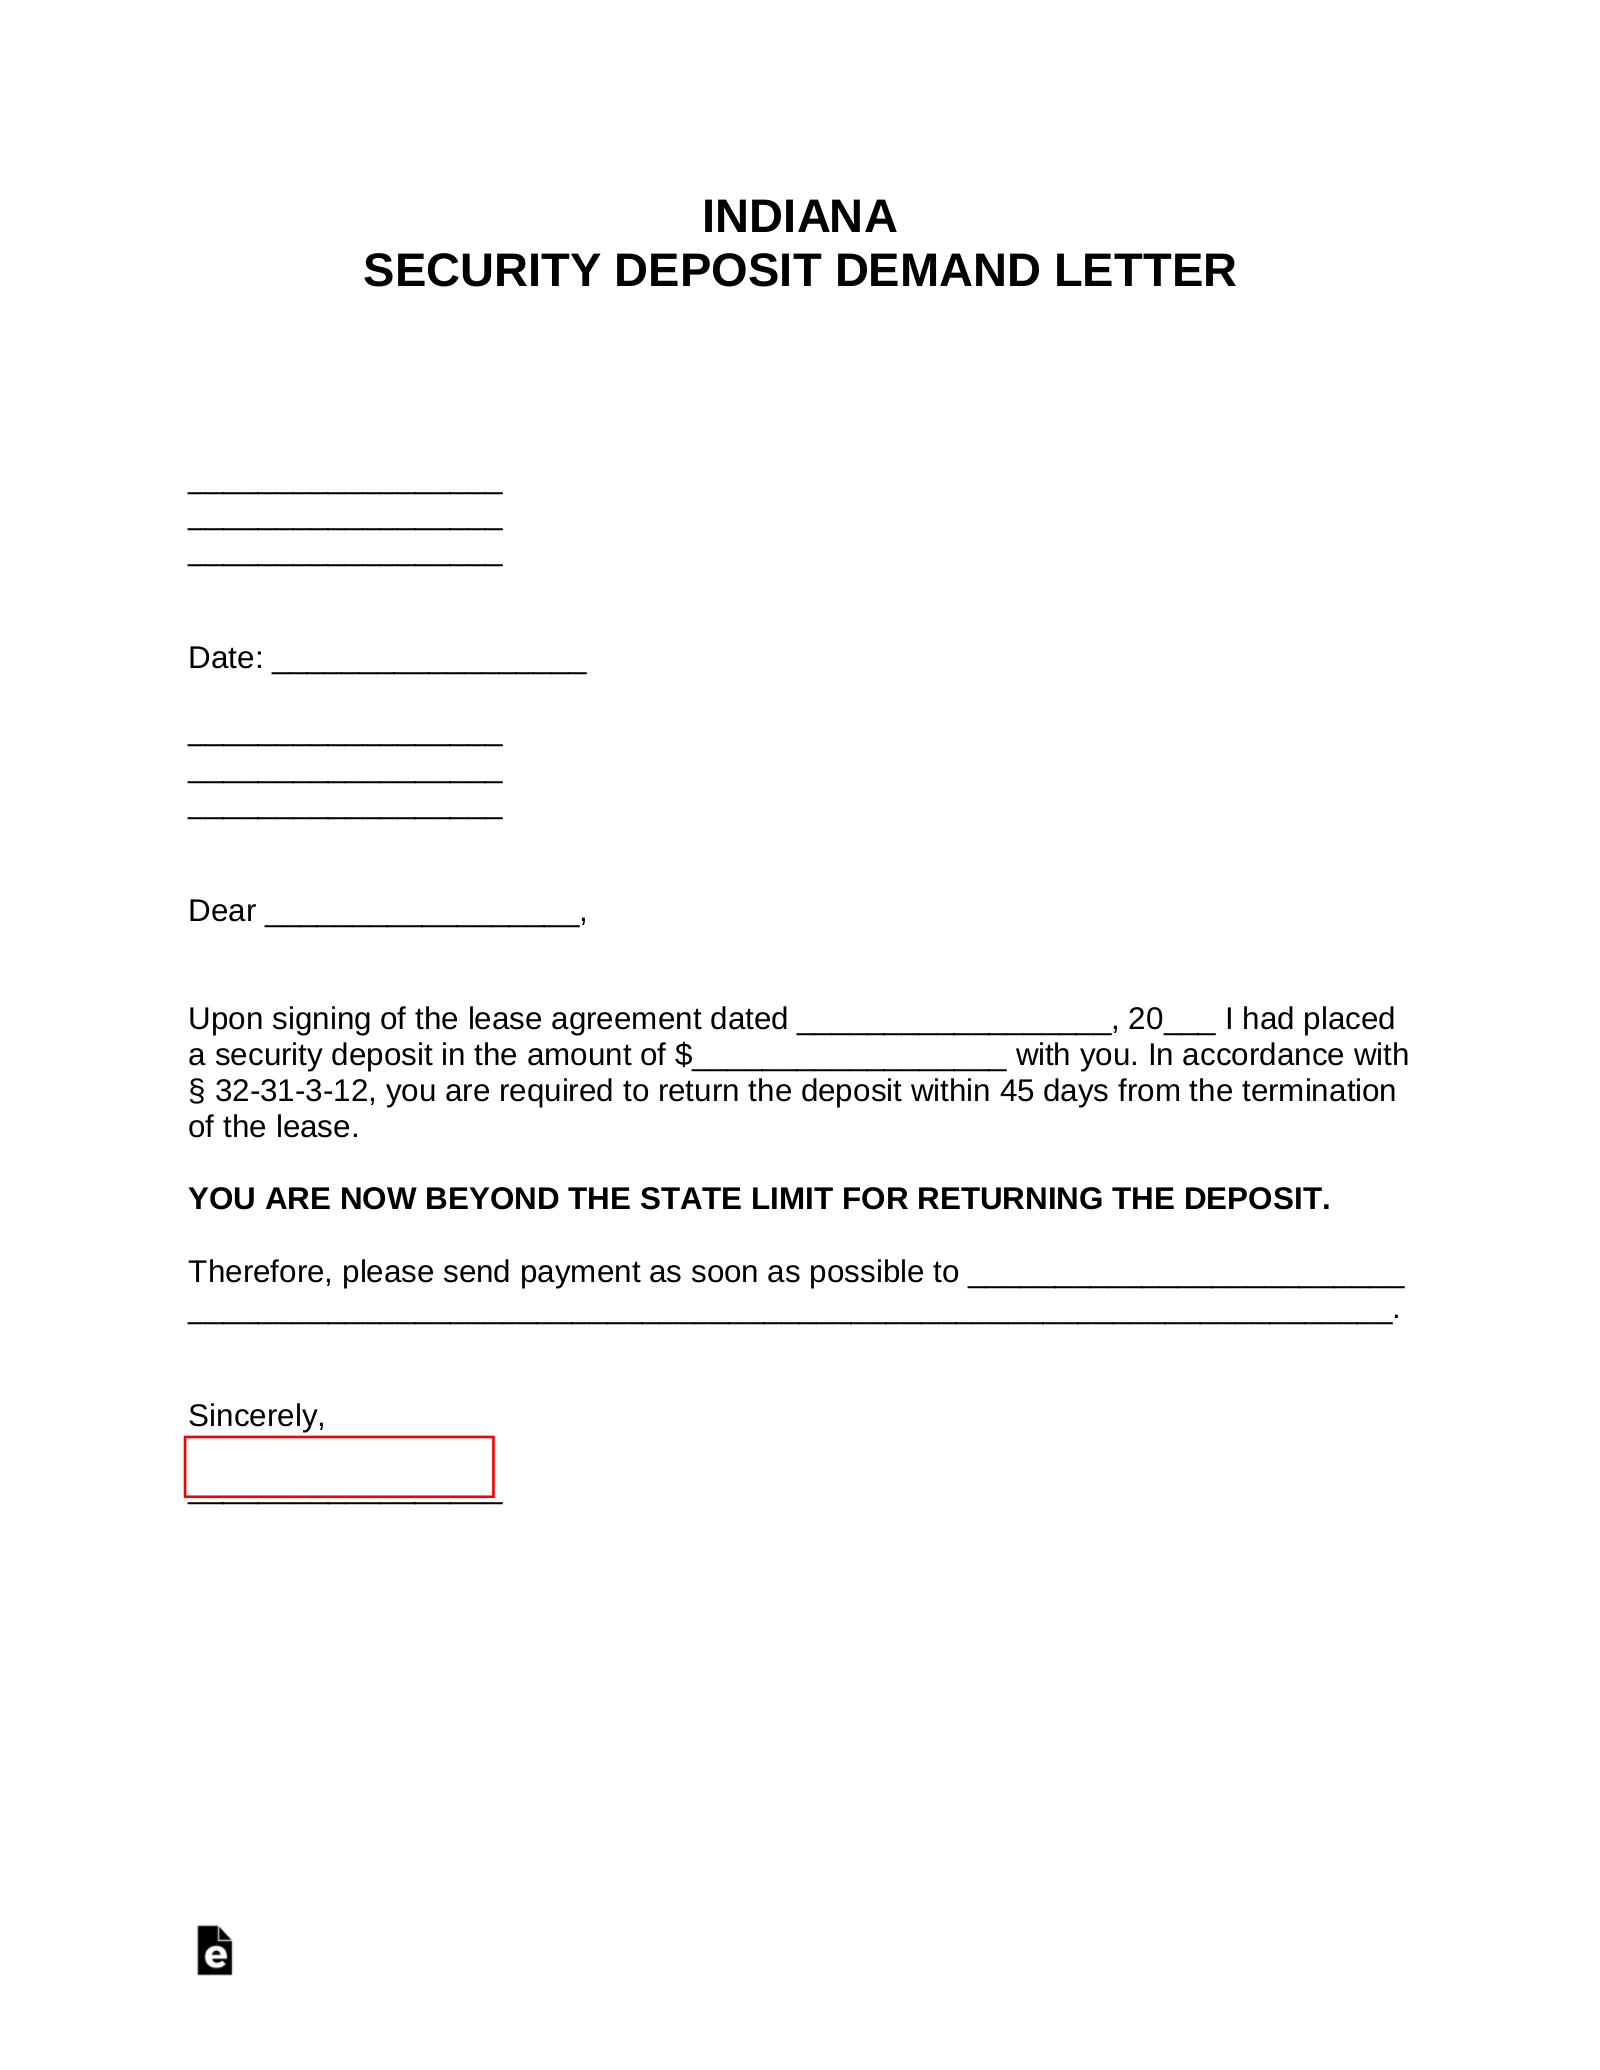 Indiana Security Deposit Demand Letter